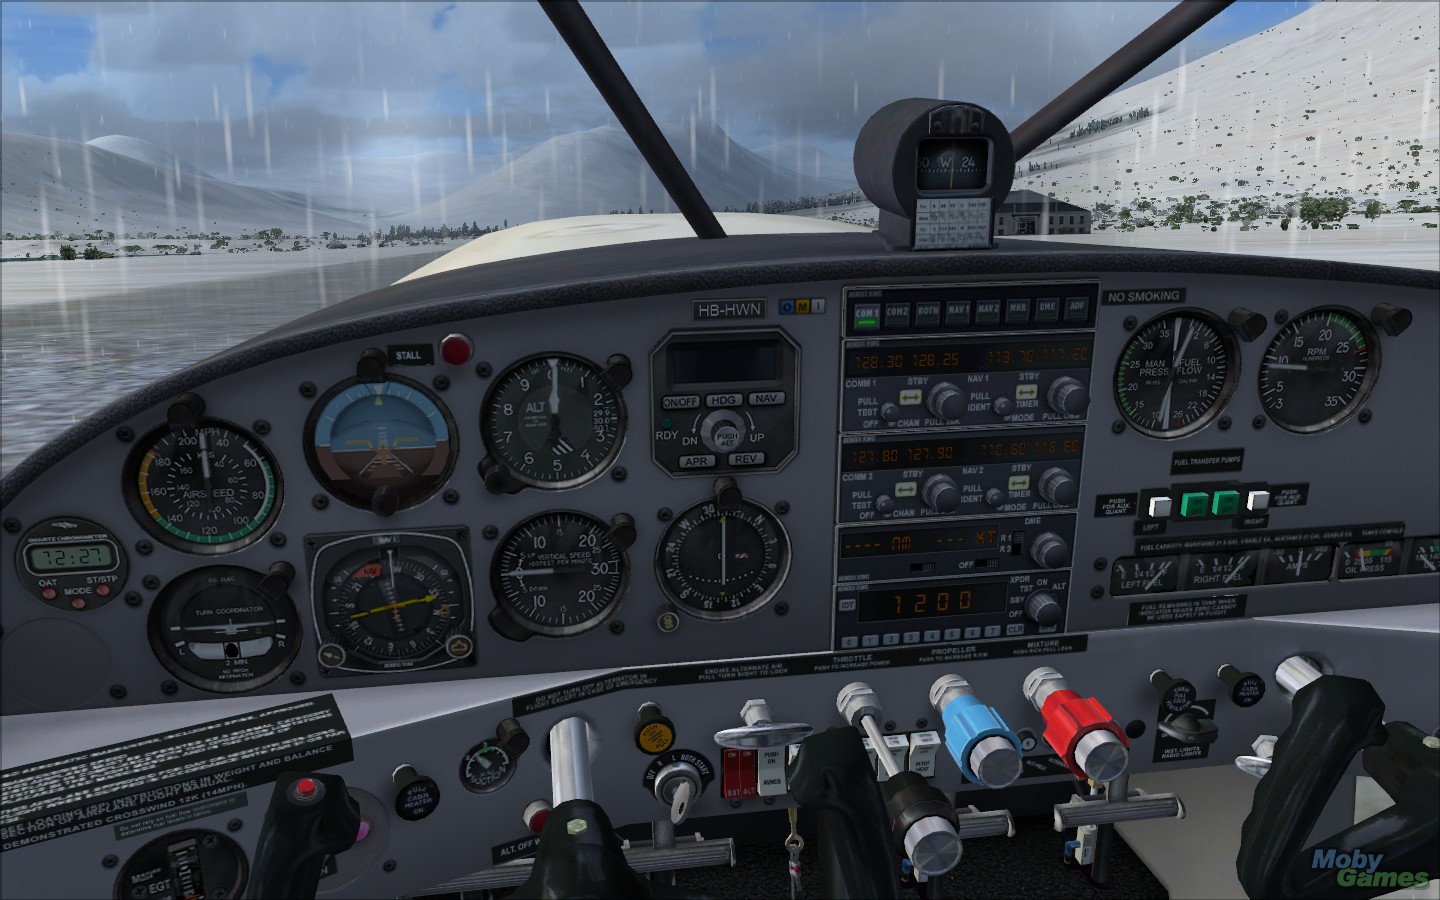 microsoft flight simulator x gold edition system requirements